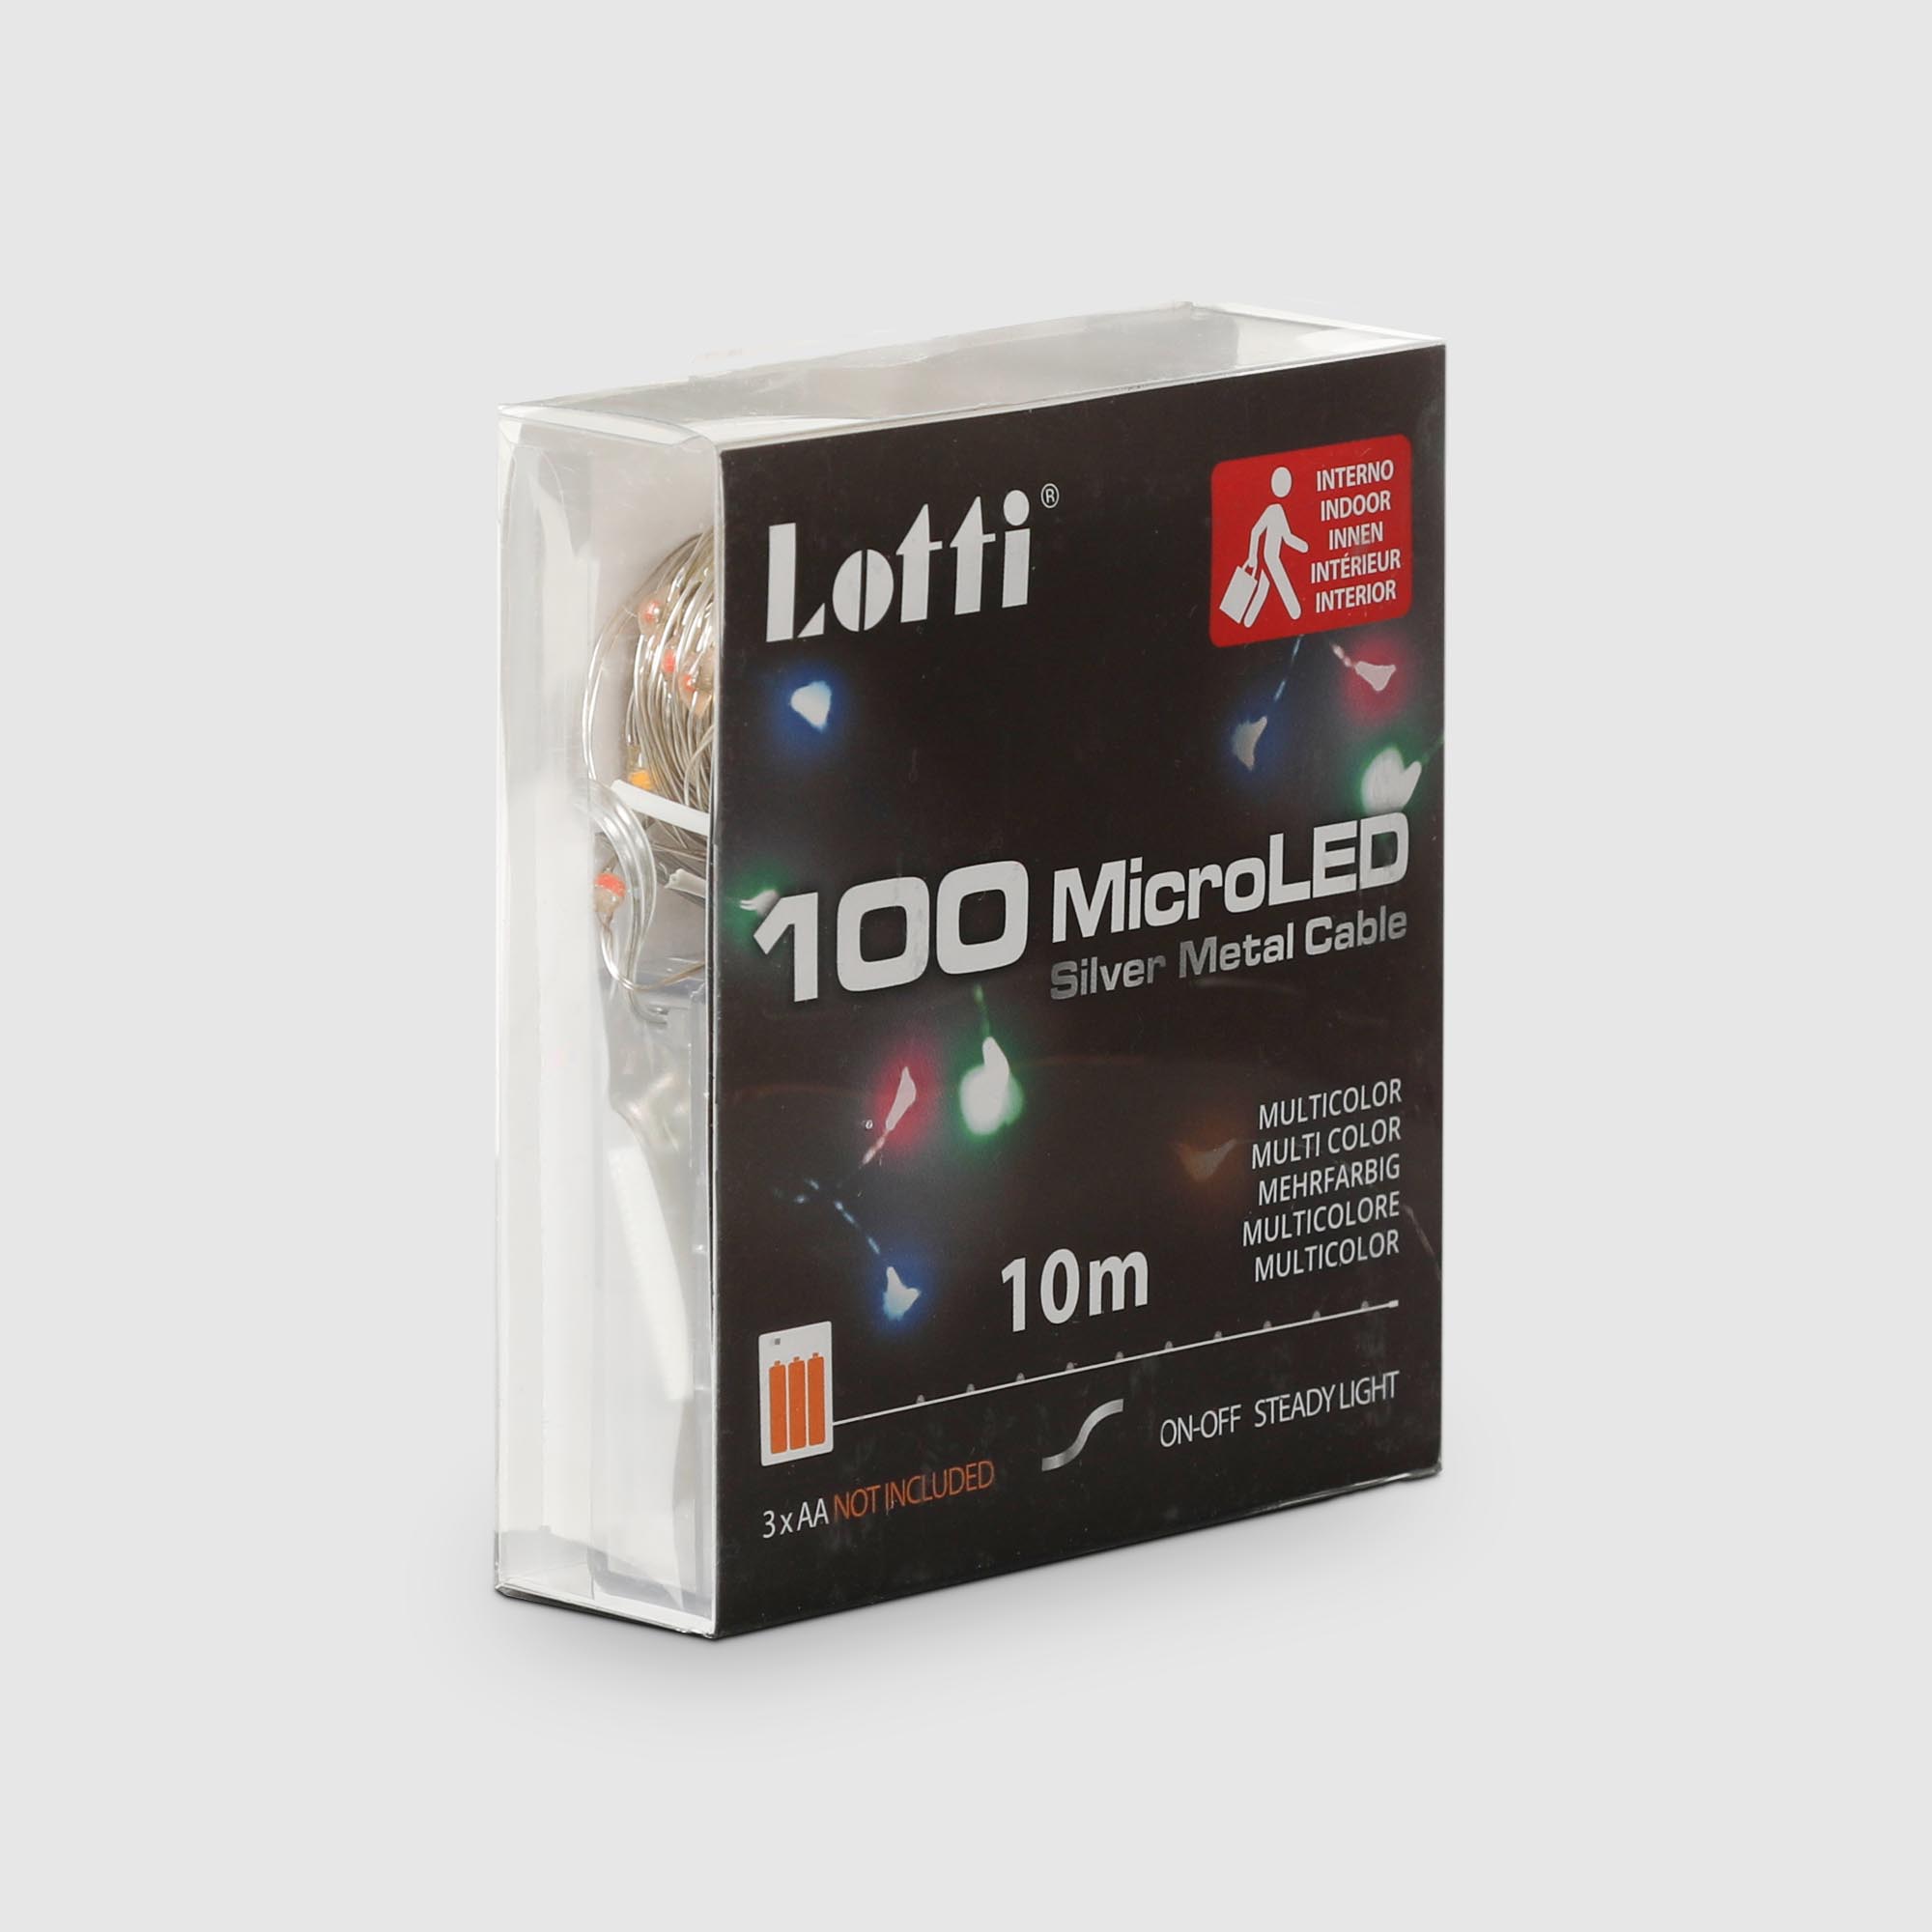 Гирлянда Lotti 10 м 100 microleds мультиколор на батарейках, цвет прозрачный - фото 6